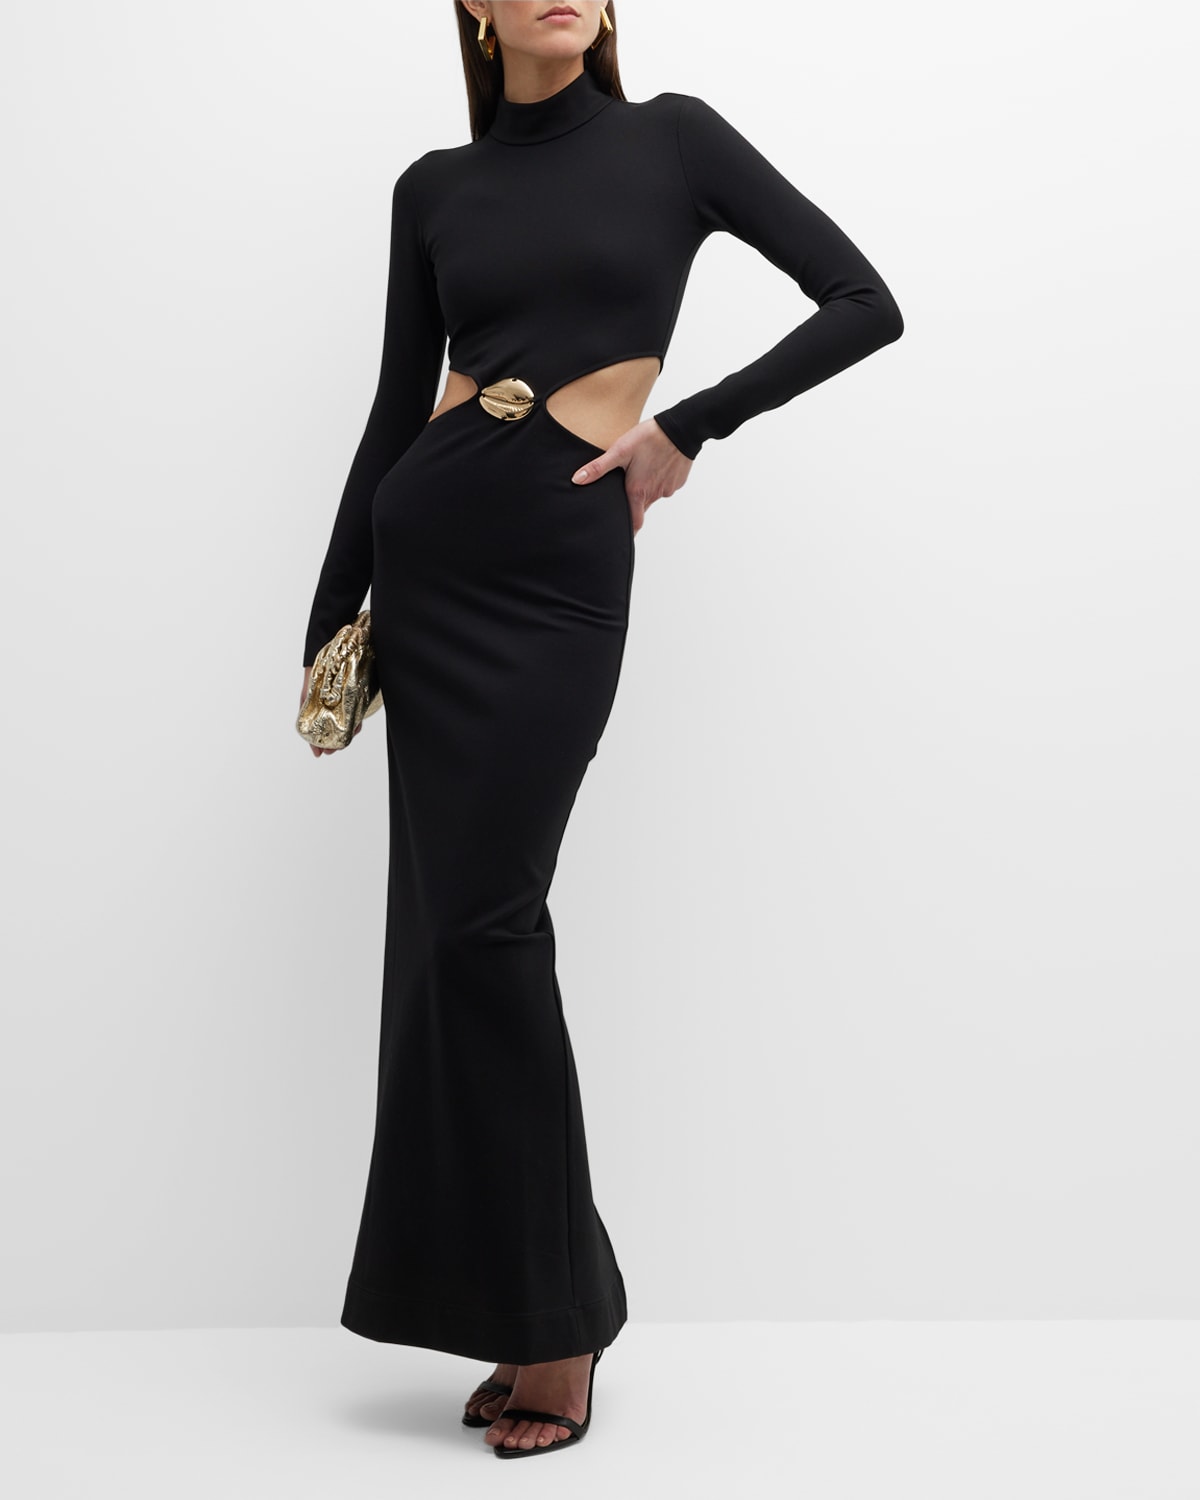 Black Sheath Dress | Neiman Marcus